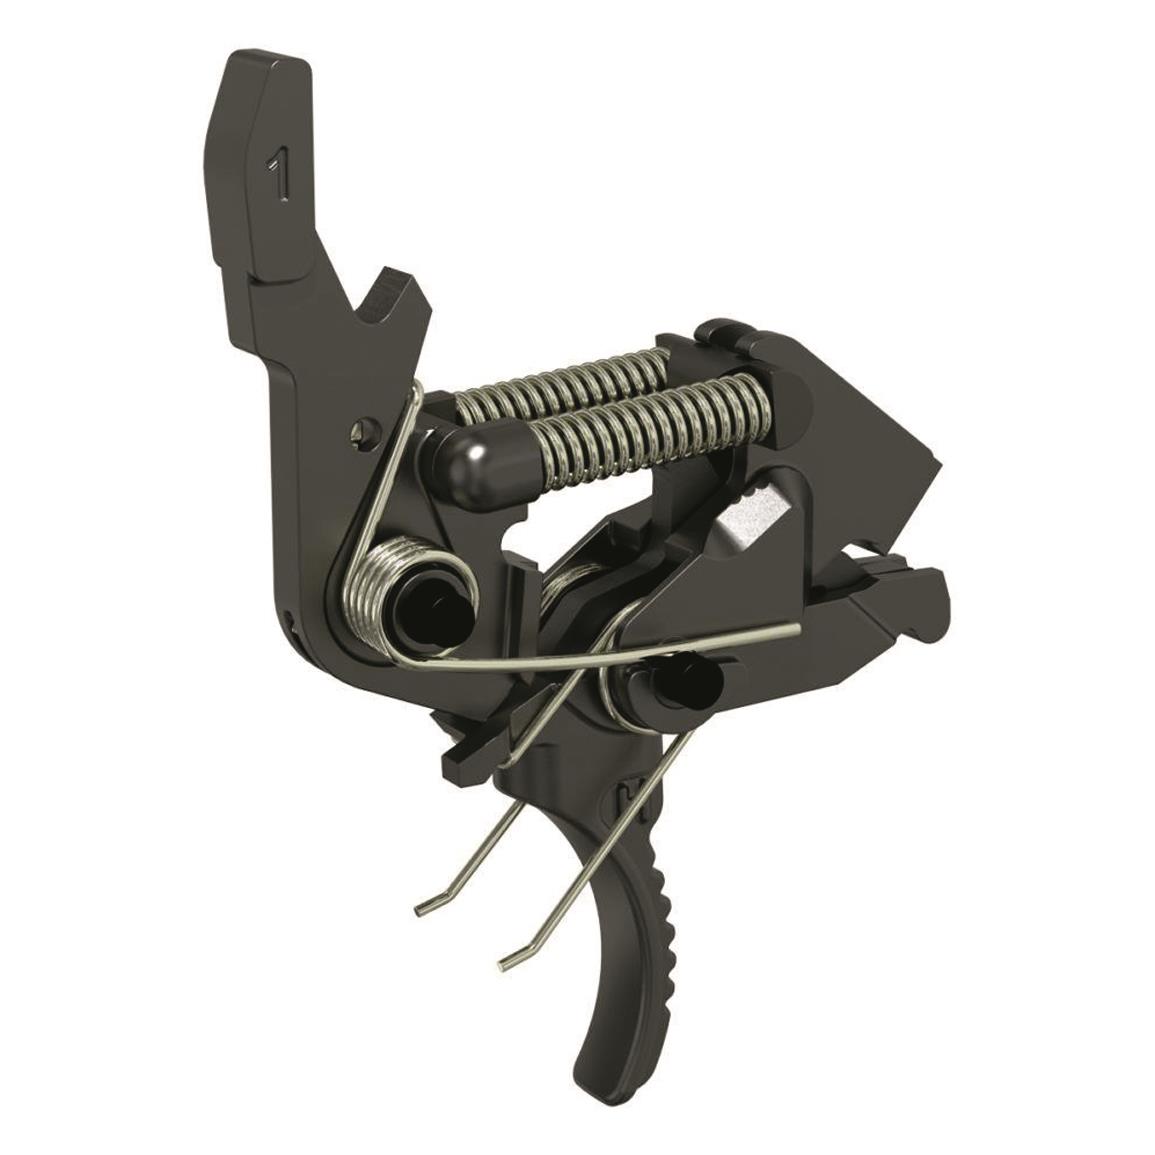 HIPERFIRE X2S MOD-1 AR-15/10 2-stage Trigger